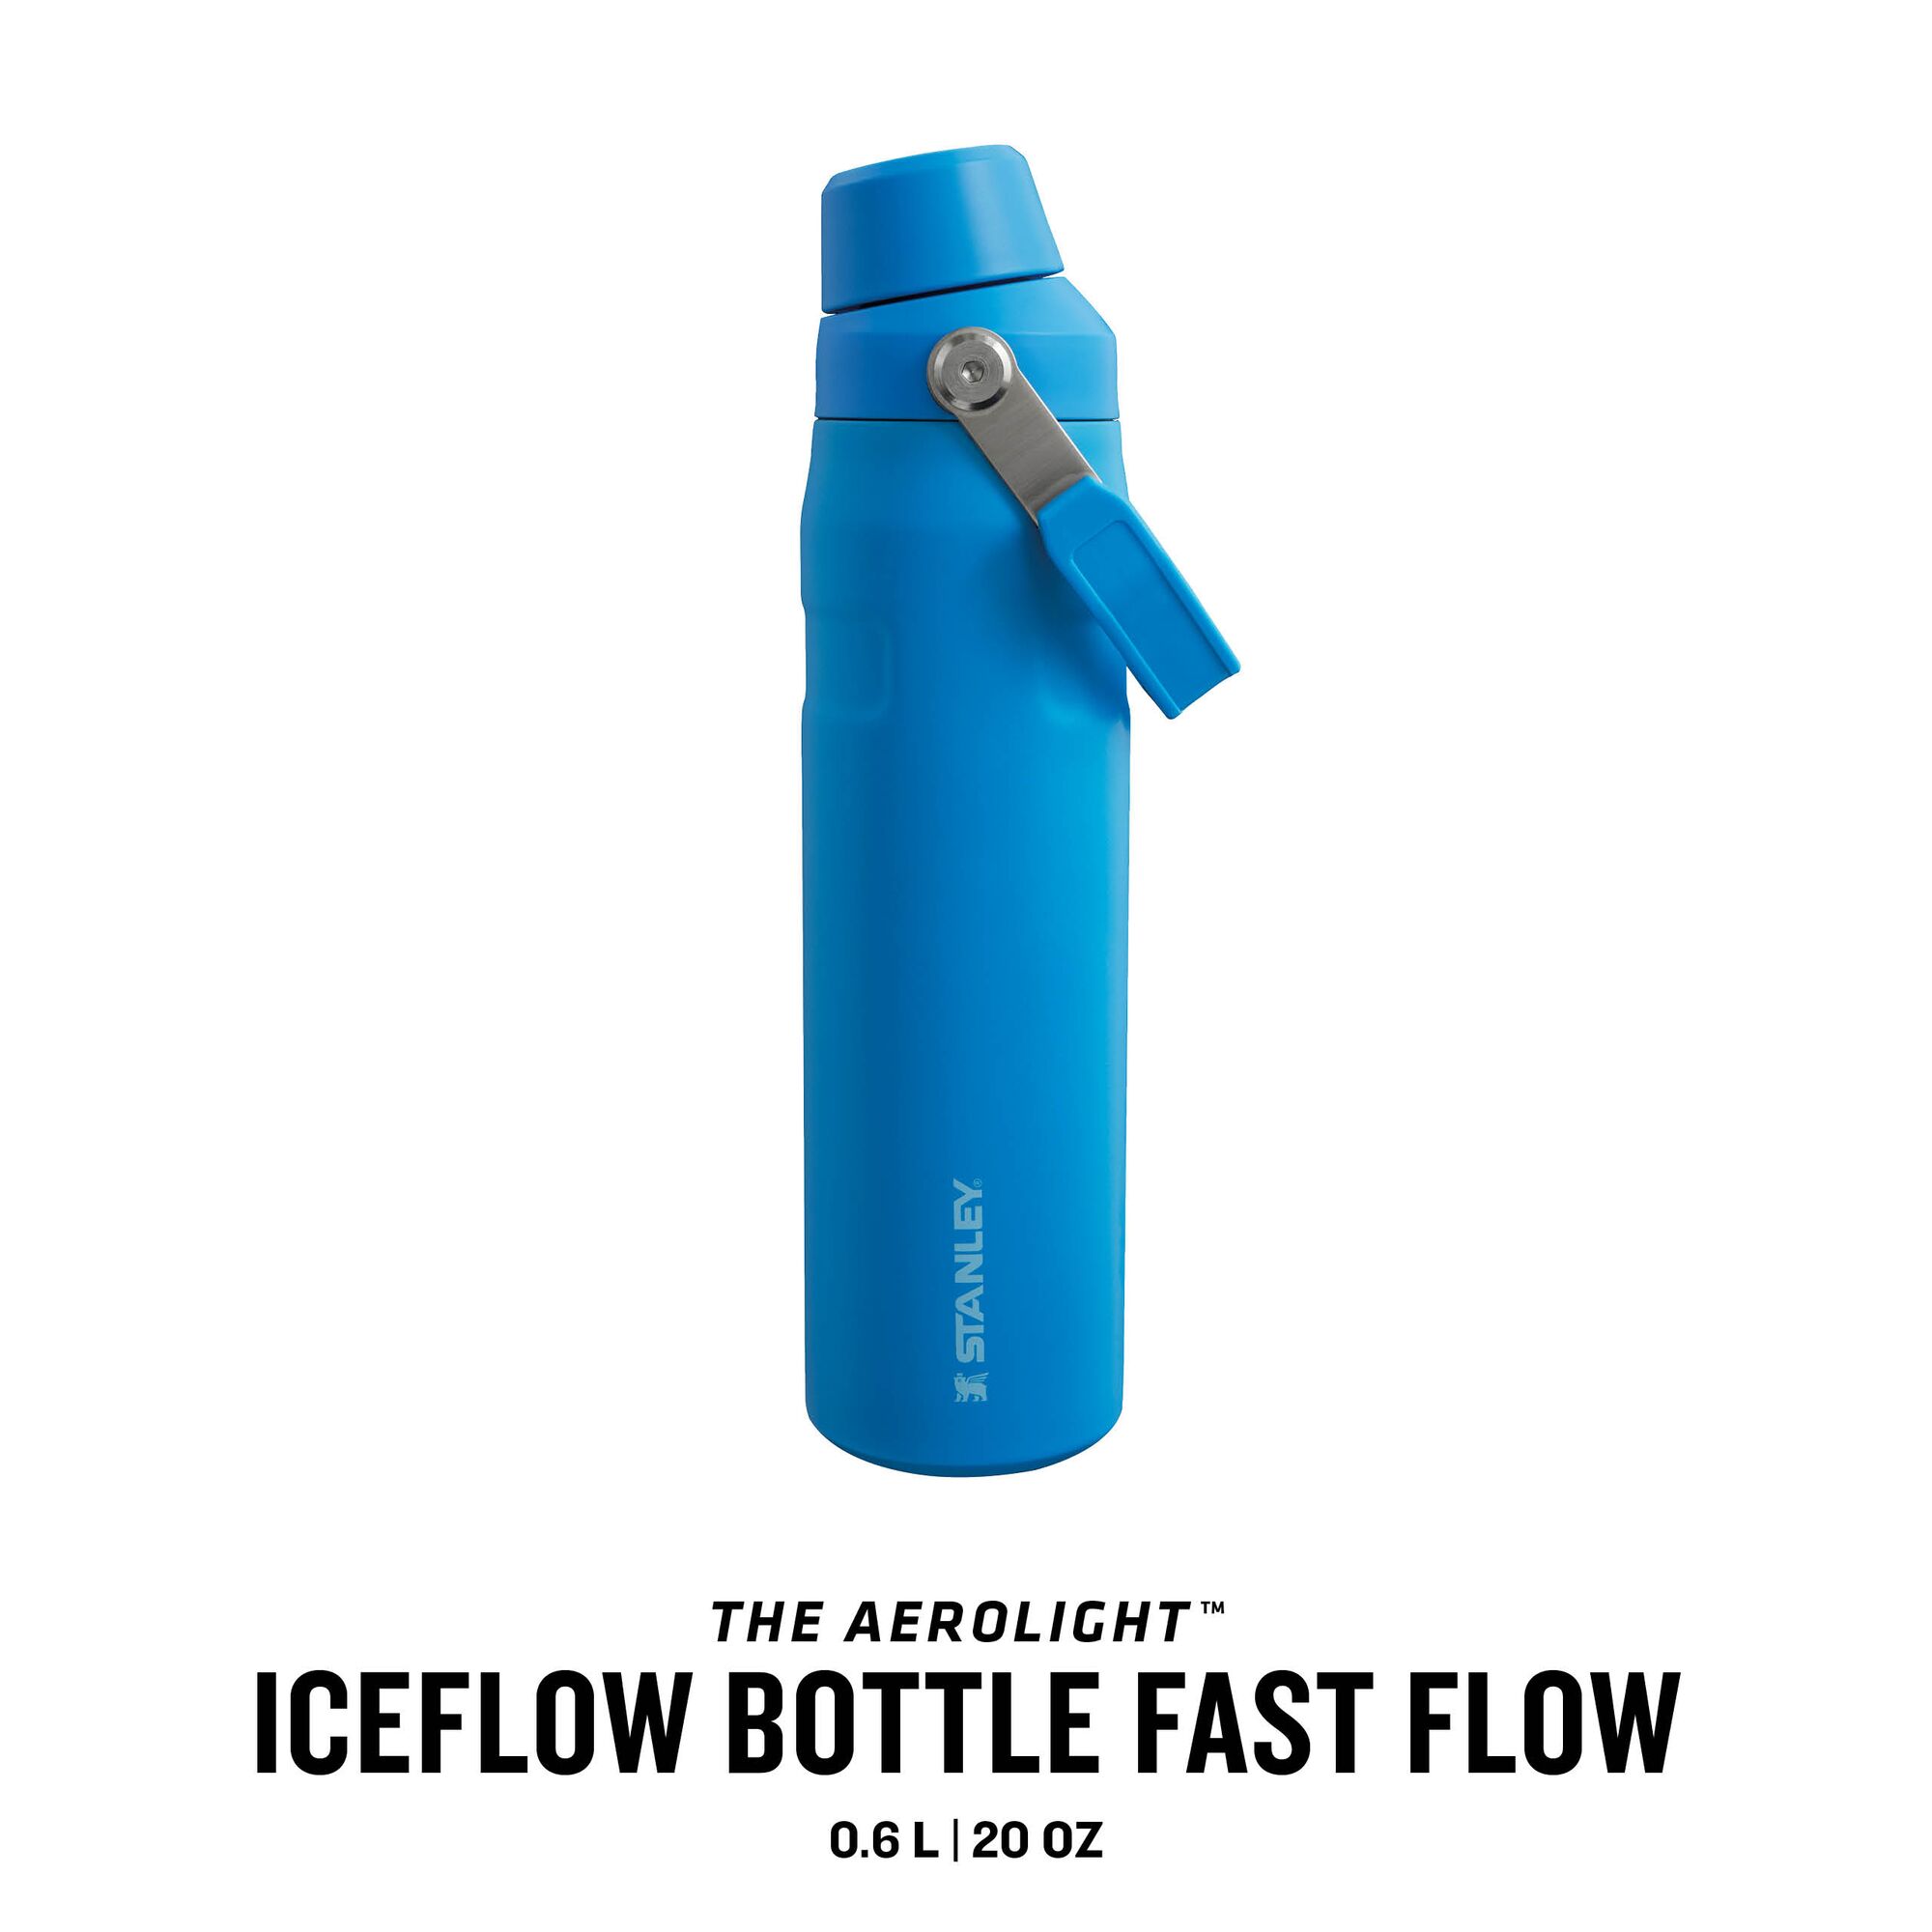 Stanley Isolierflasche The Aerolight Iceflow Bottle Fast Flow 0,6l Azure